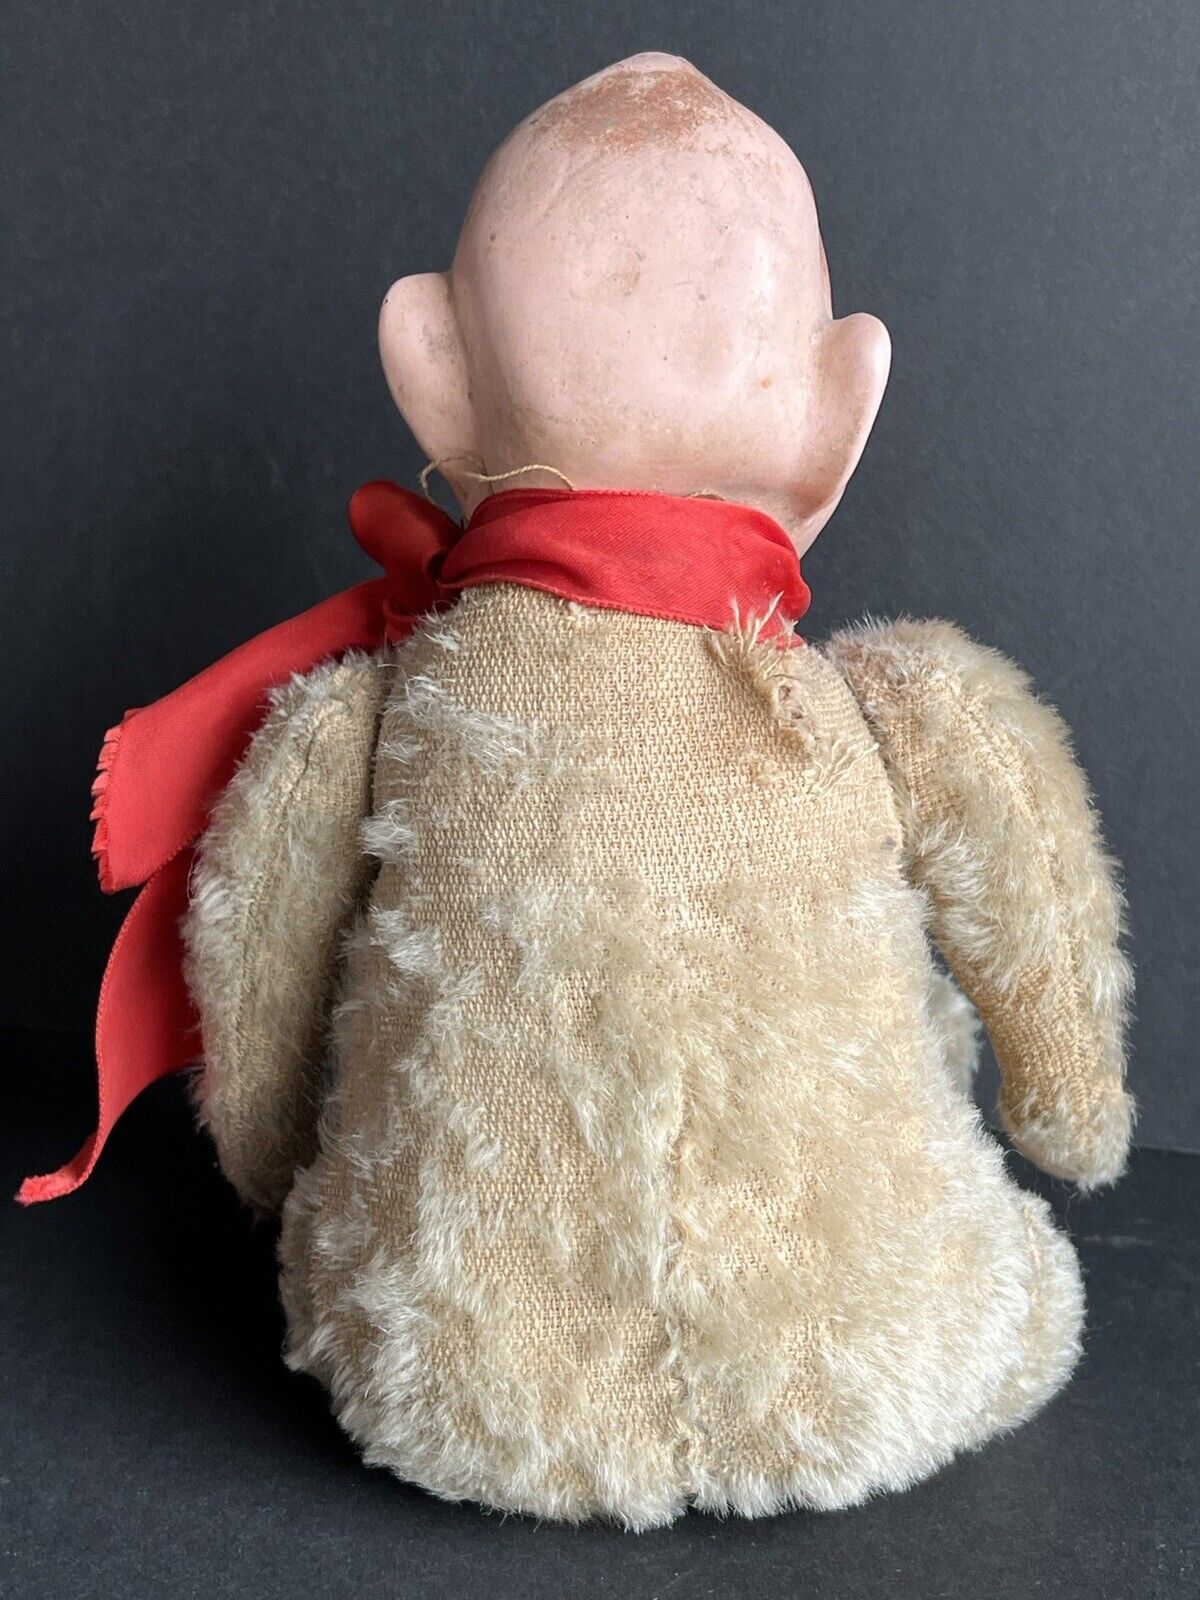 Rare Original Horsman 11” Composition Plush Billiken Jointed Toy Doll